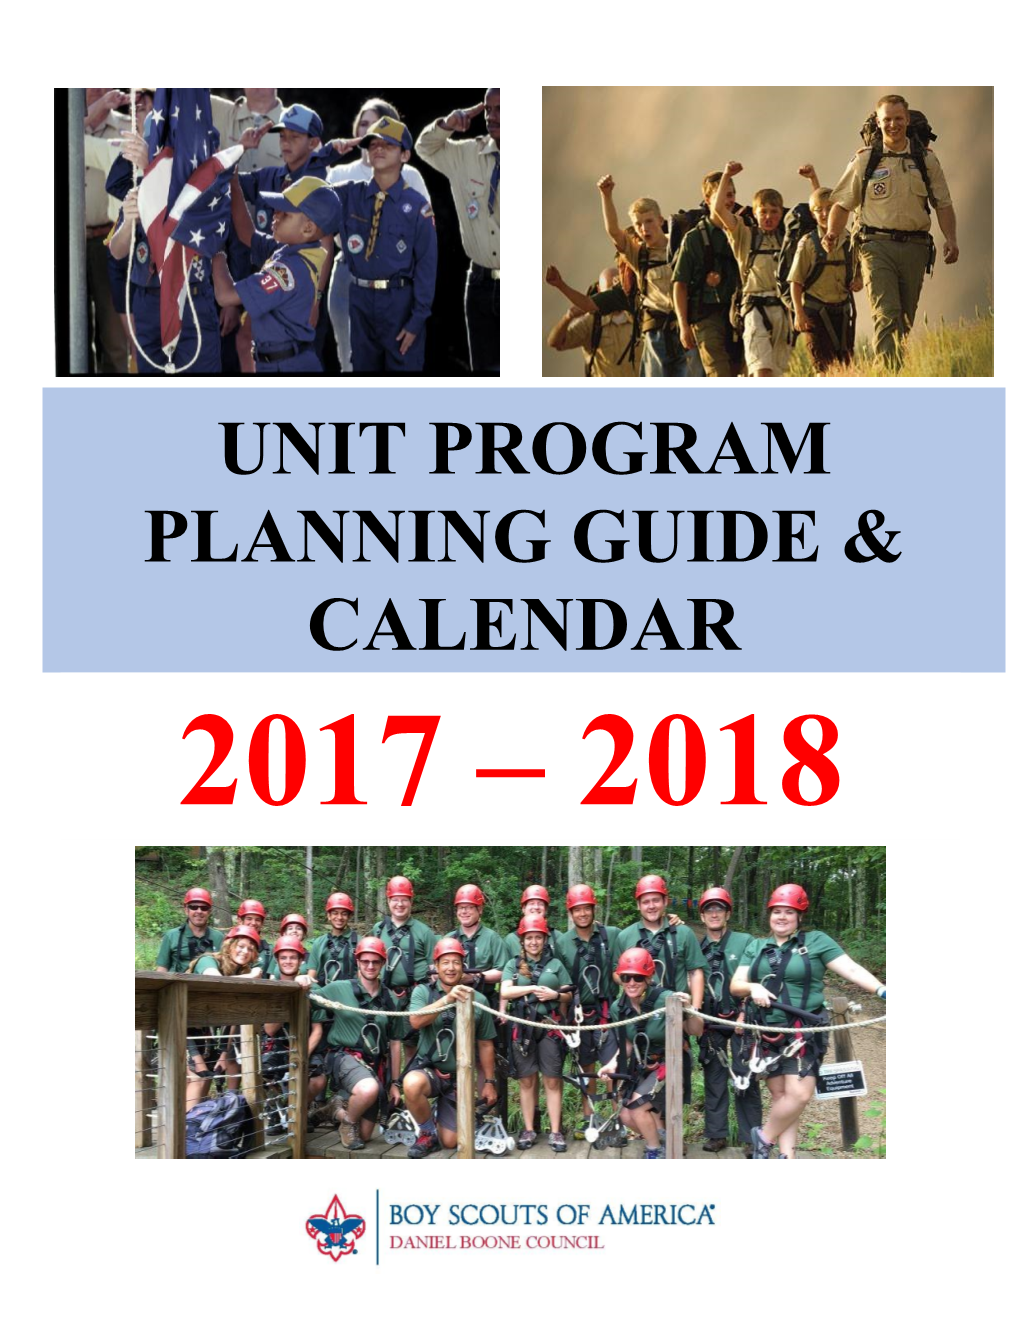 Daniel Boone Council Planning Calendar & Guide DocsLib